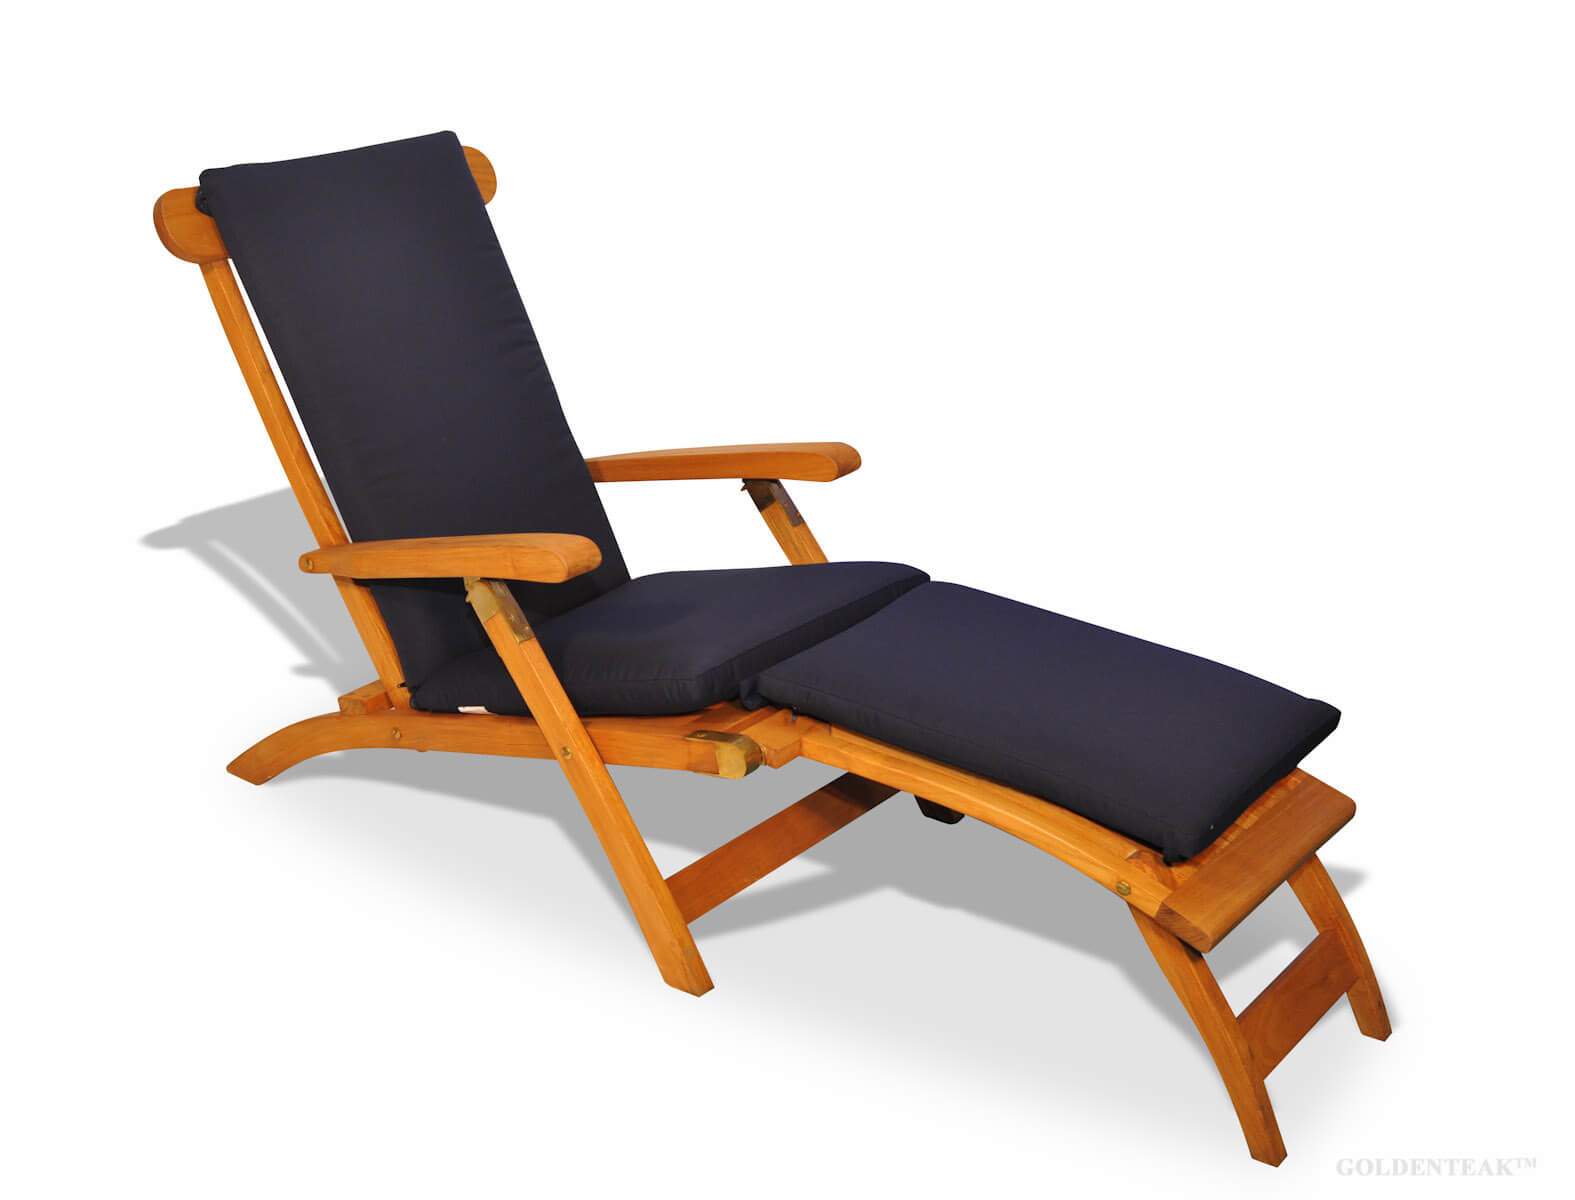 Brannon Whisper Made in USA Sunbrella Steamer Chair Replacement Cushion Pad 